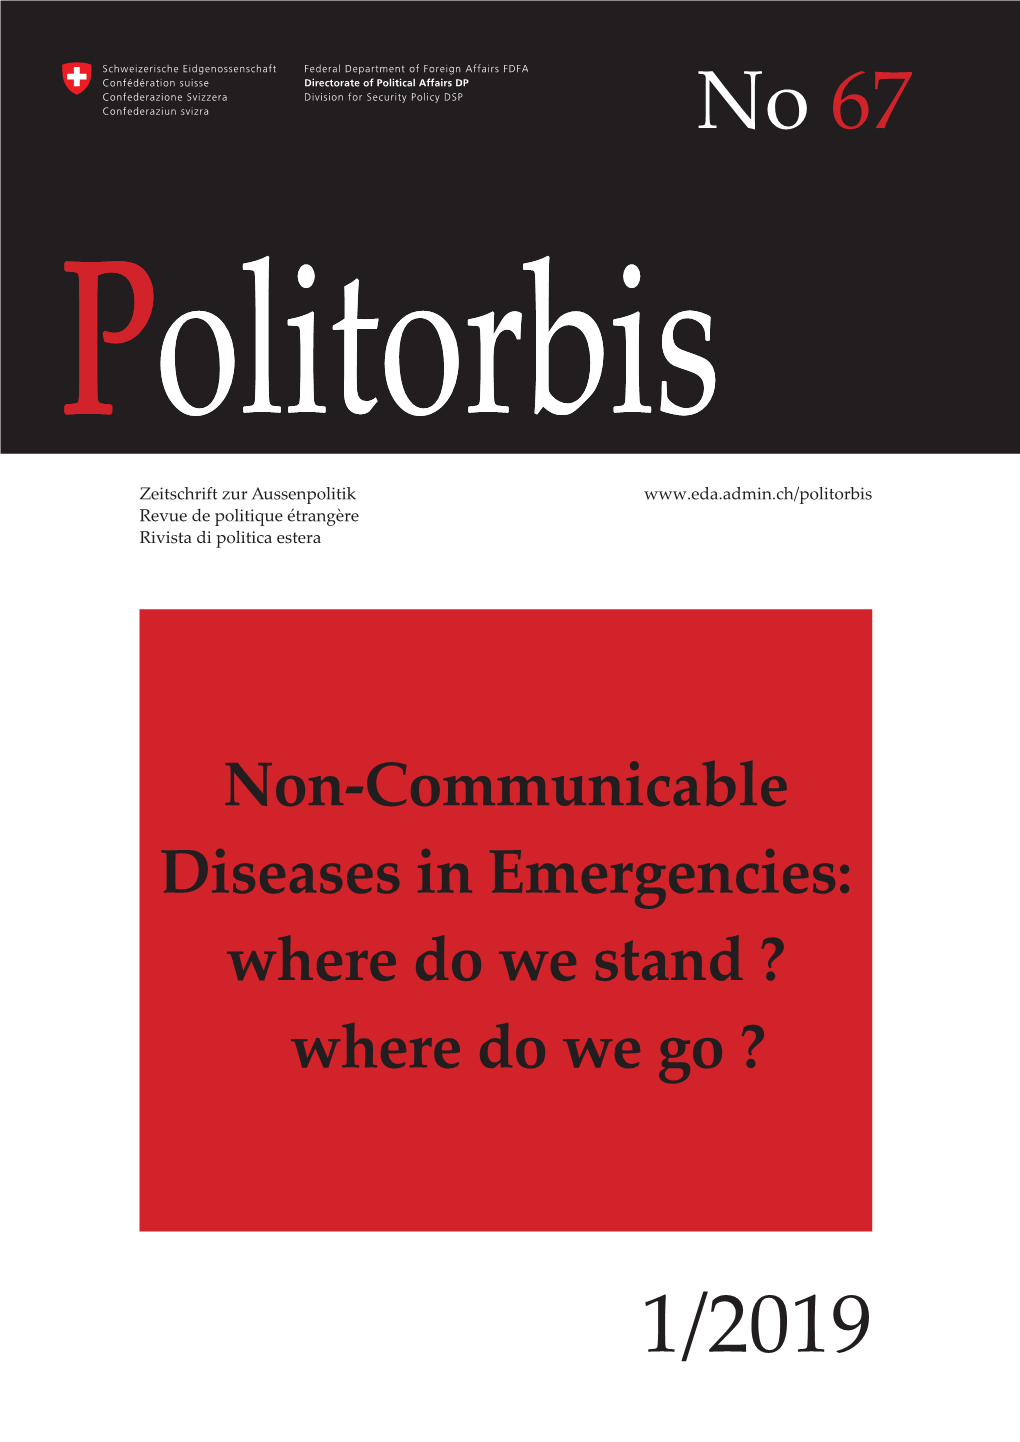 ICRC's Non-Communicable Diseases Management